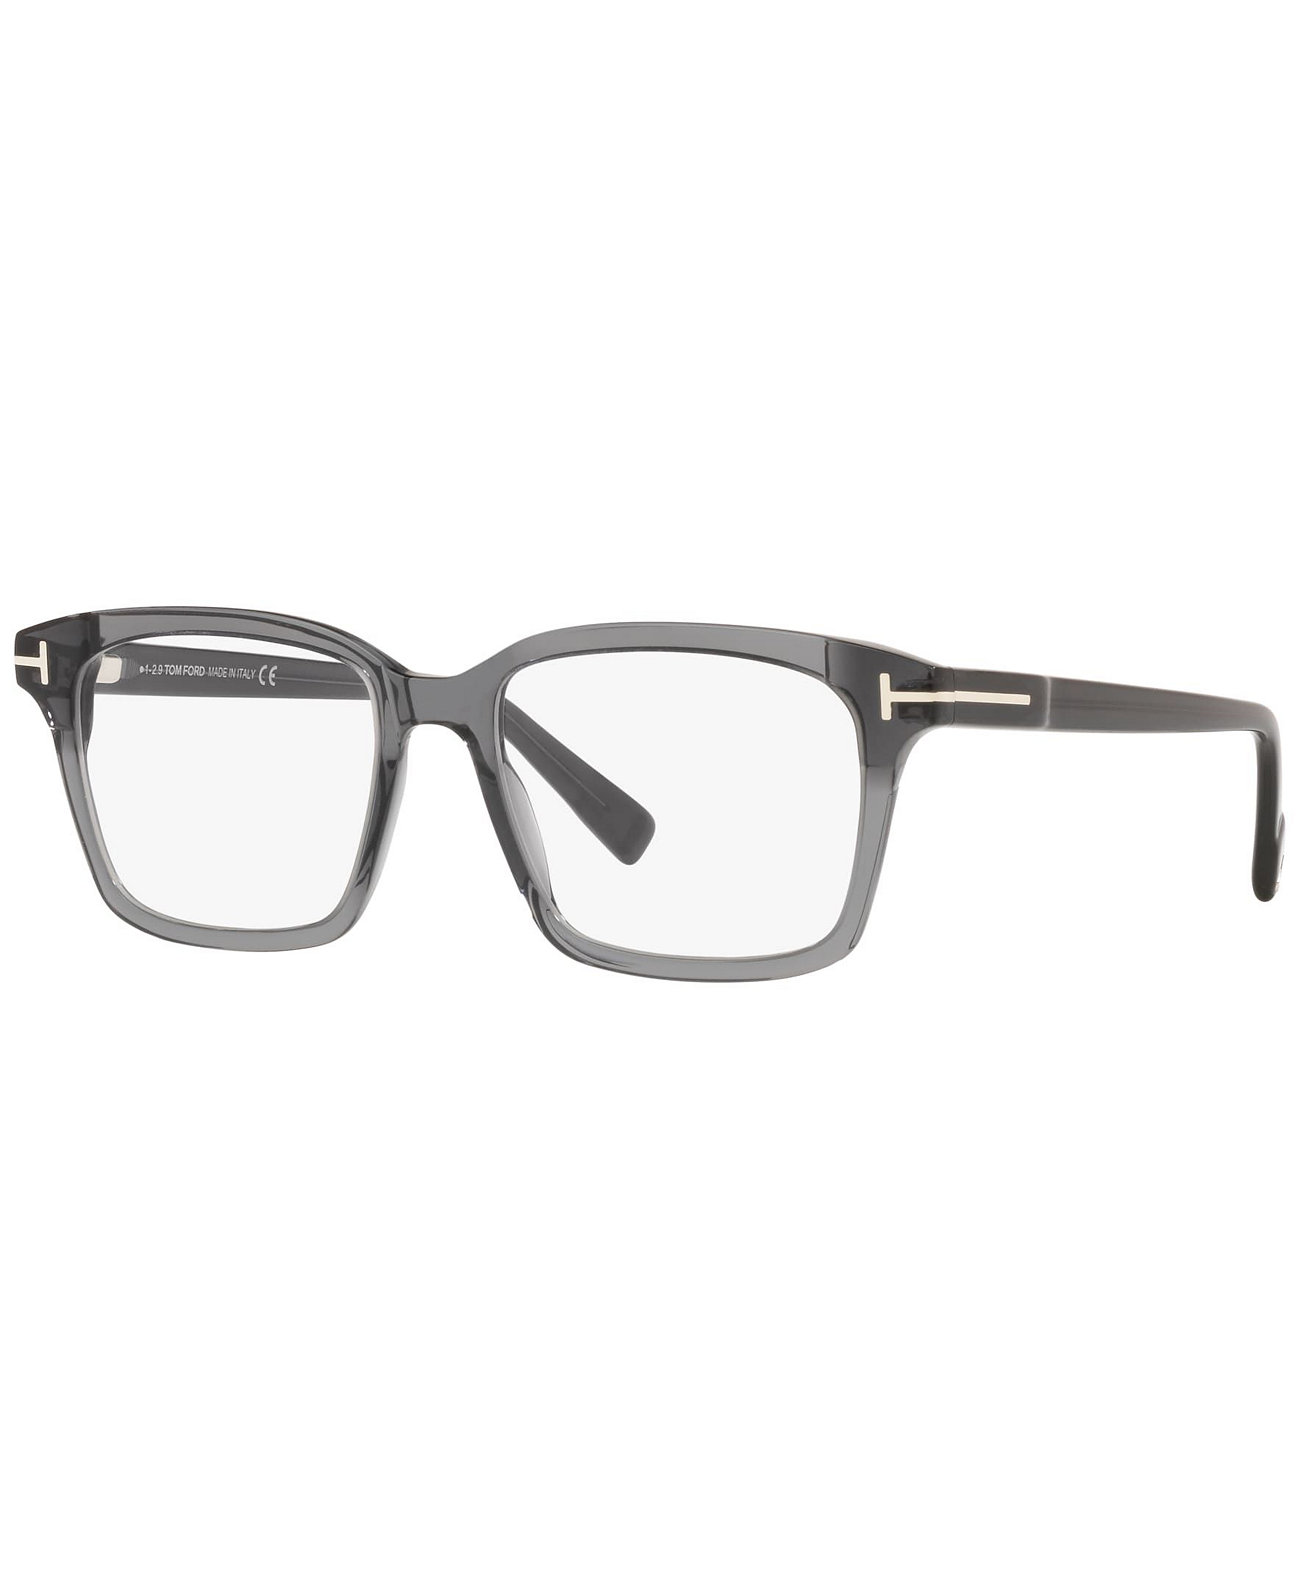 Мужские квадратные очки FT5661-BW54020 Tom Ford